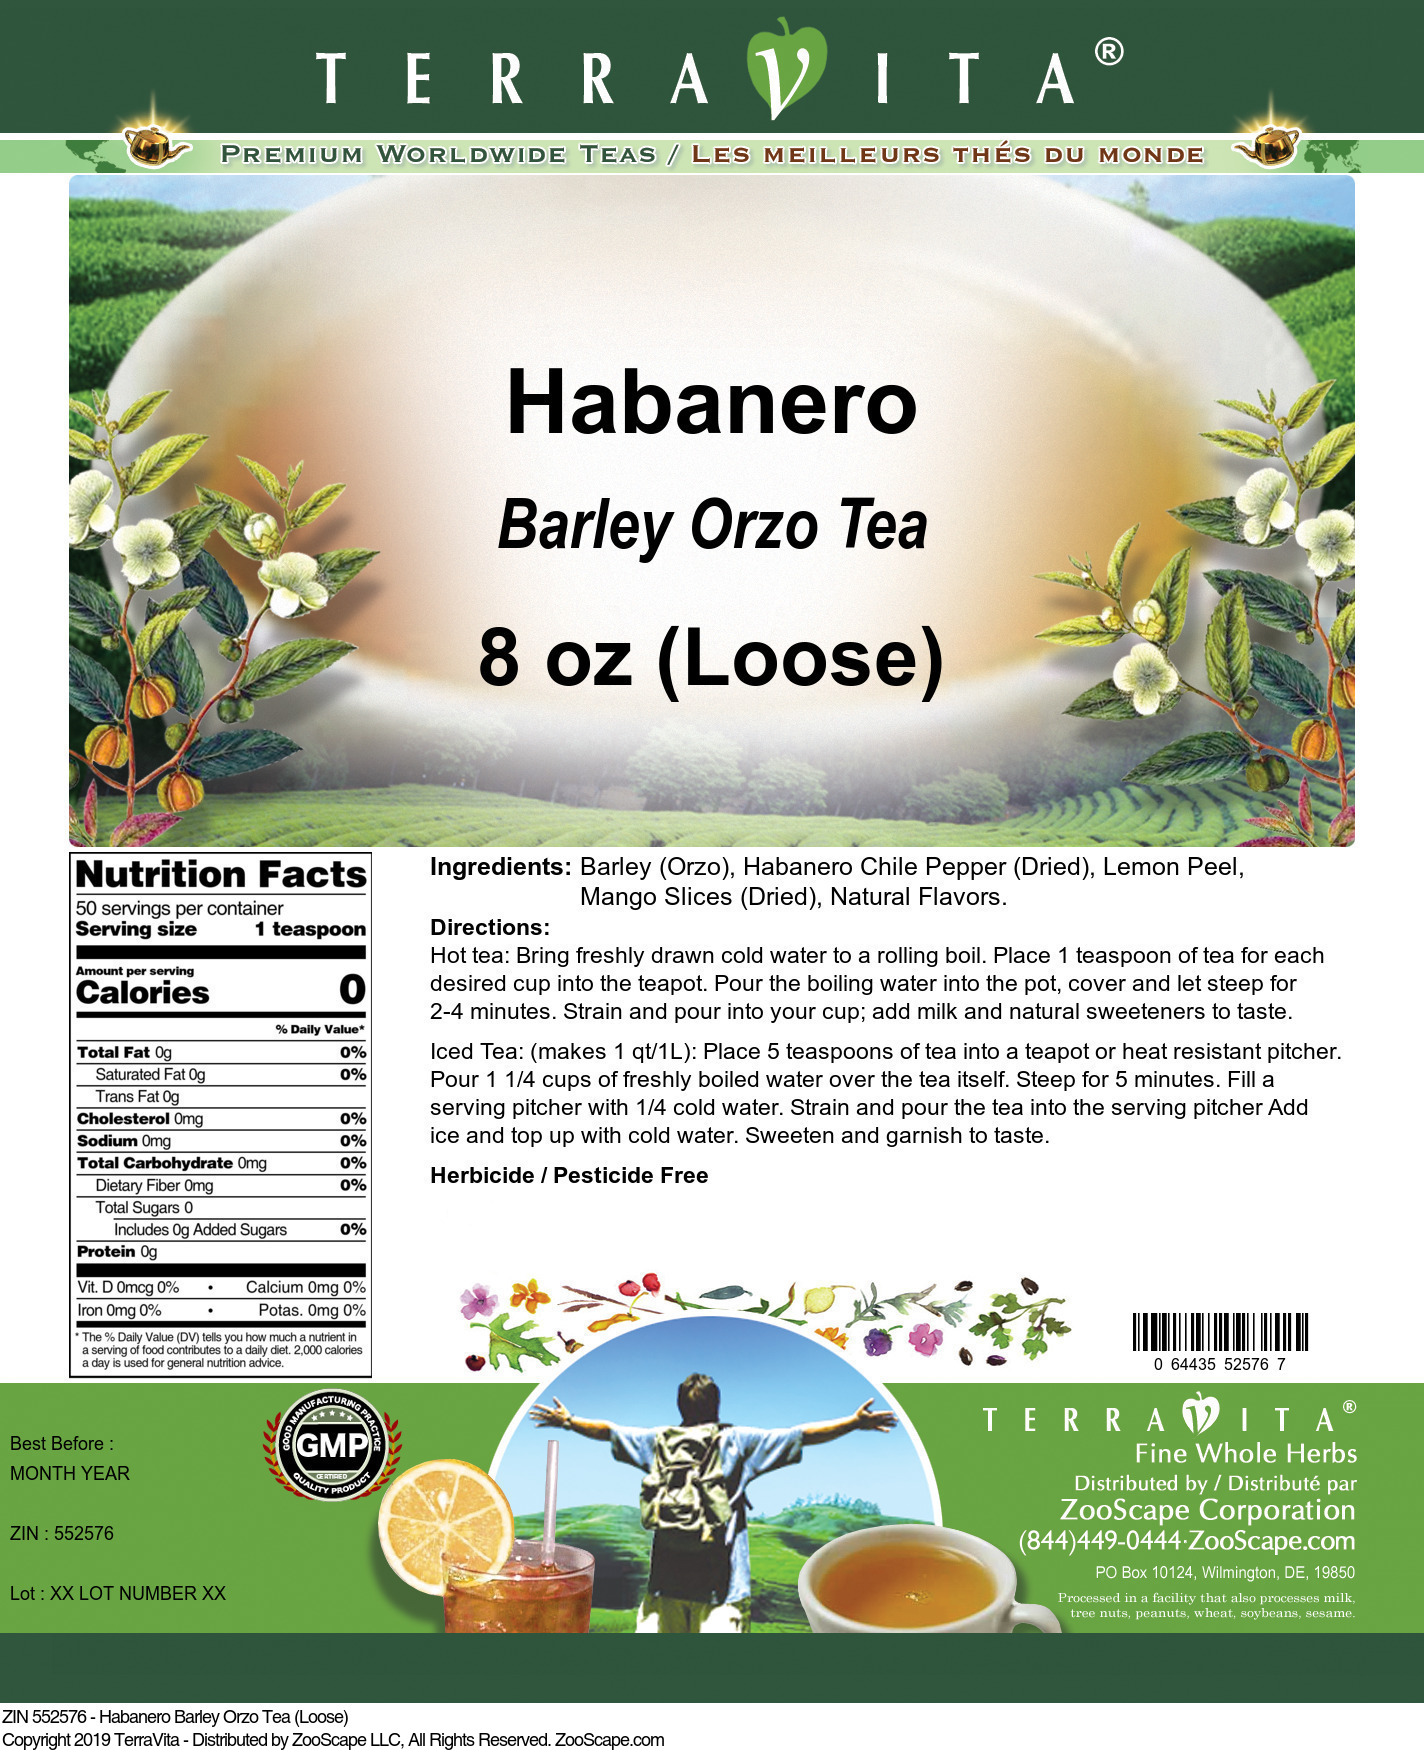 Habanero Barley Orzo Tea (Loose) - Label